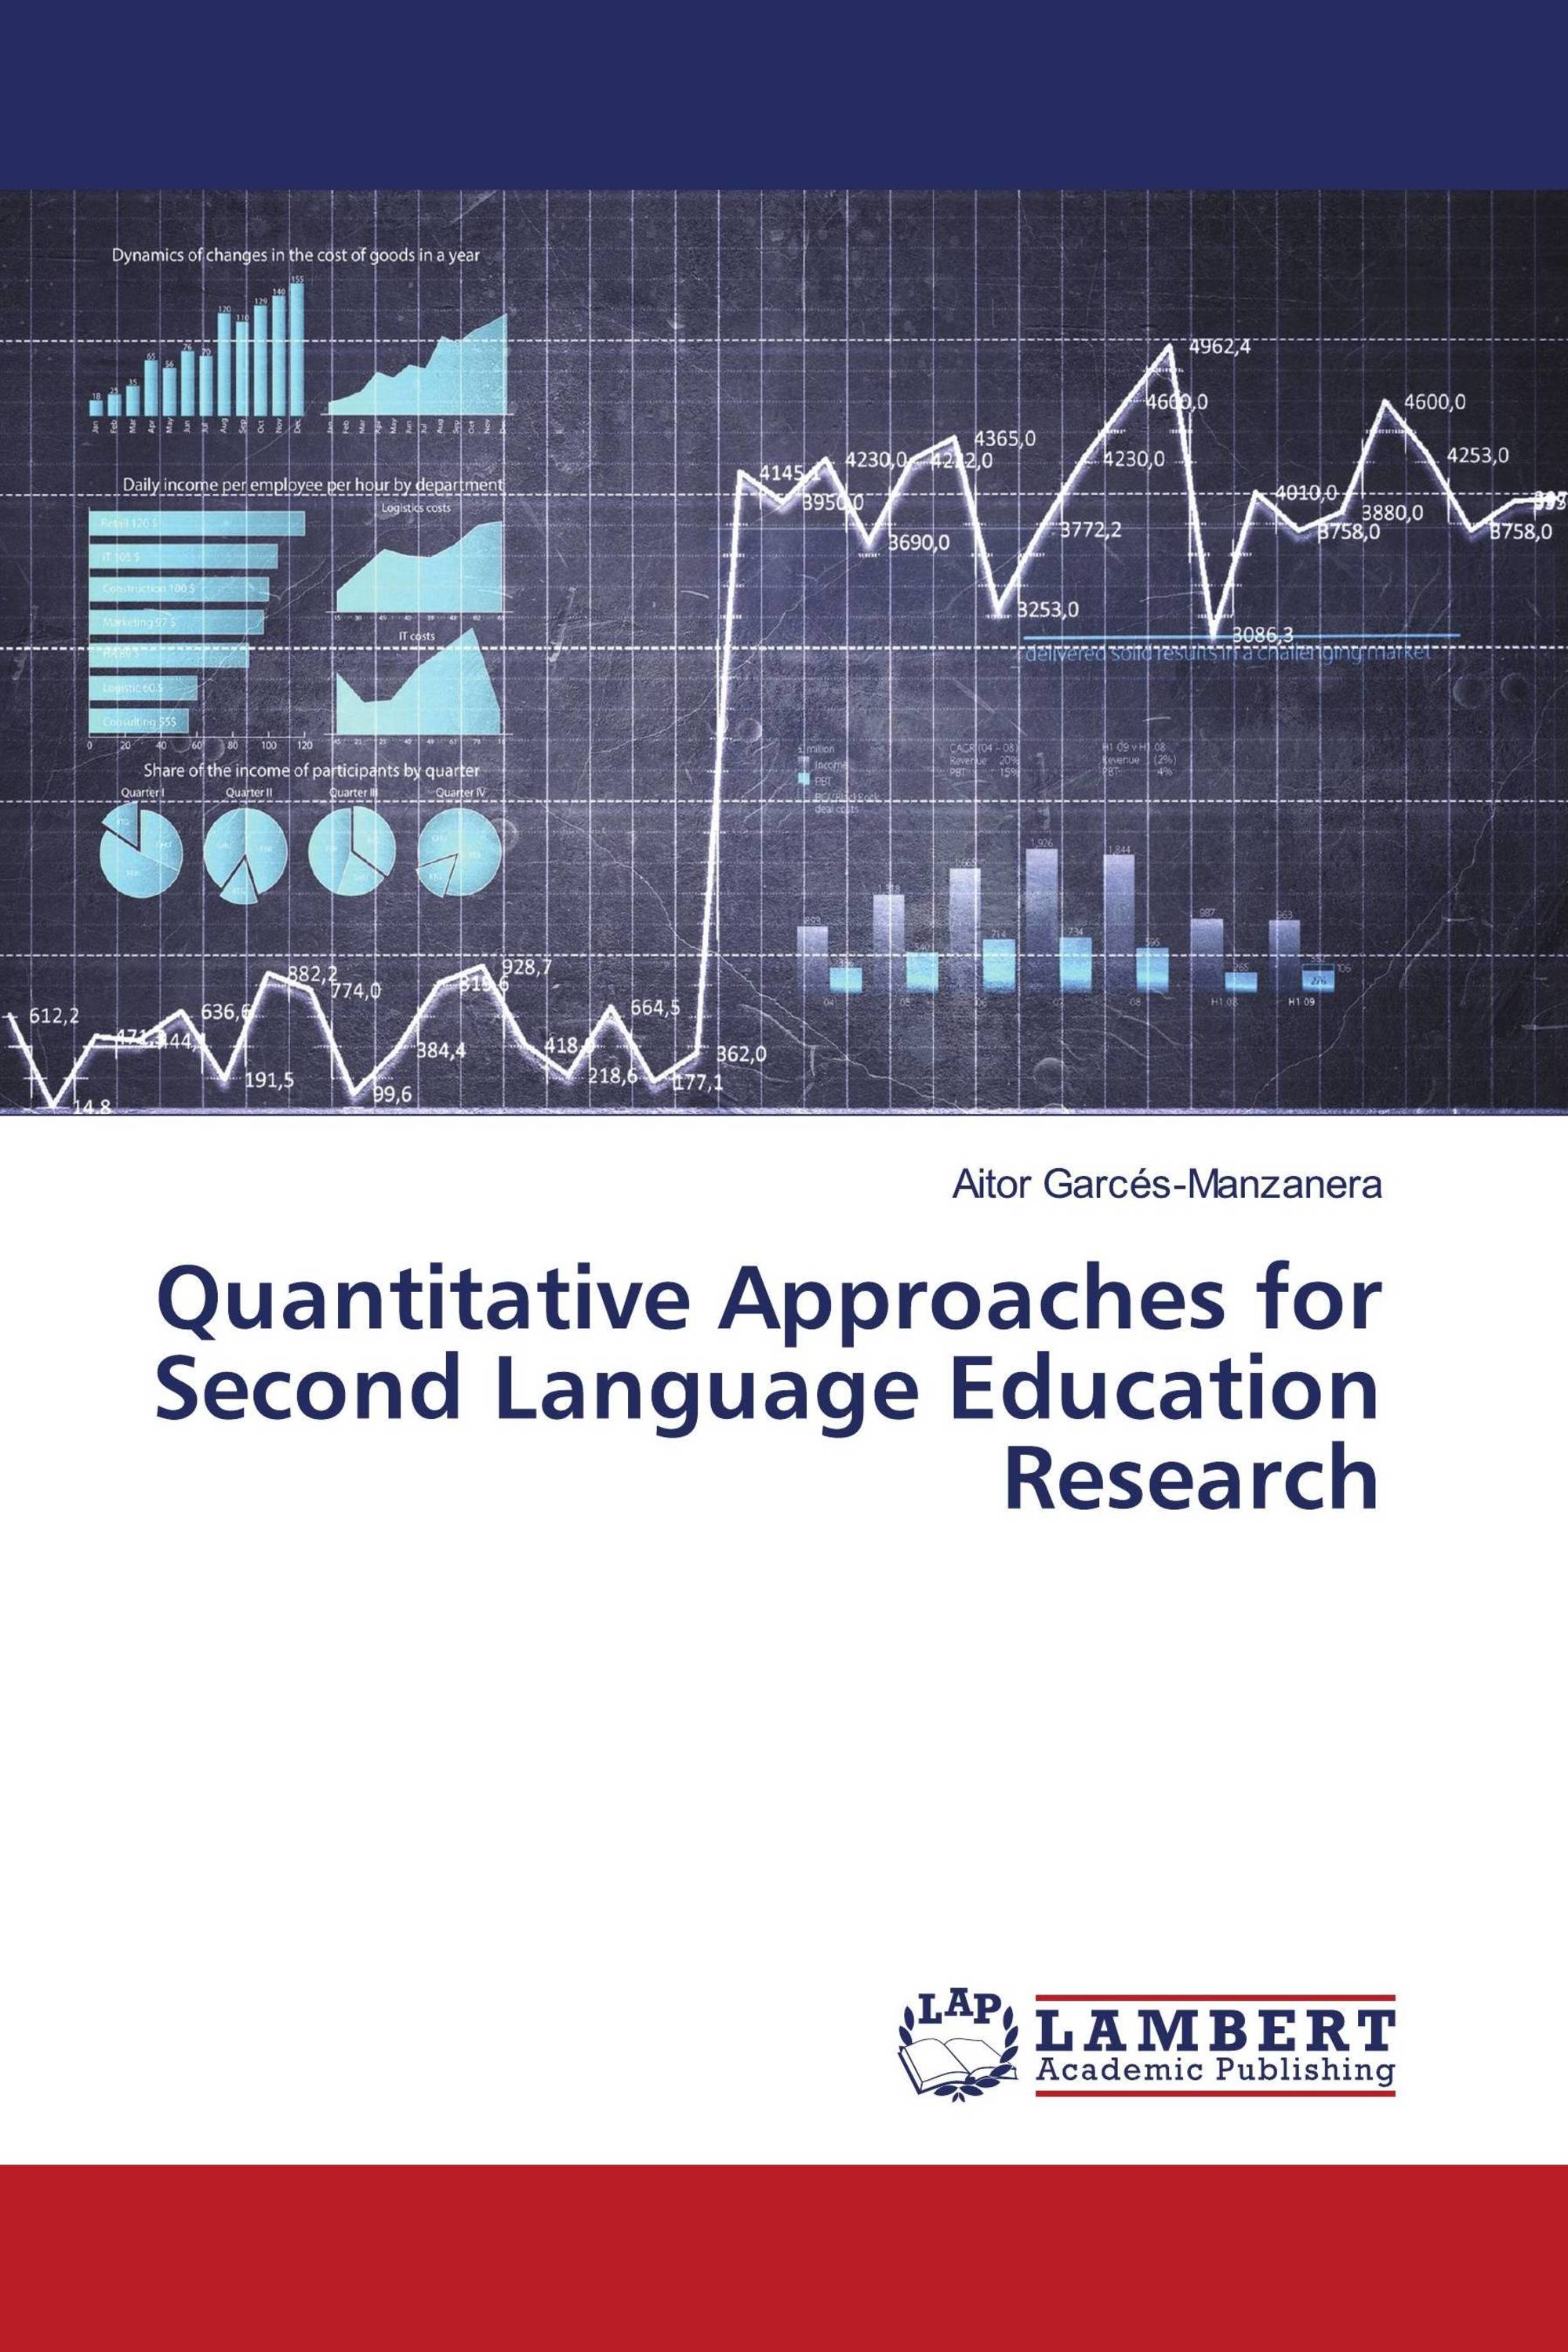 Imagen de portada del libro Quantitative Approaches for Second Language Education Research